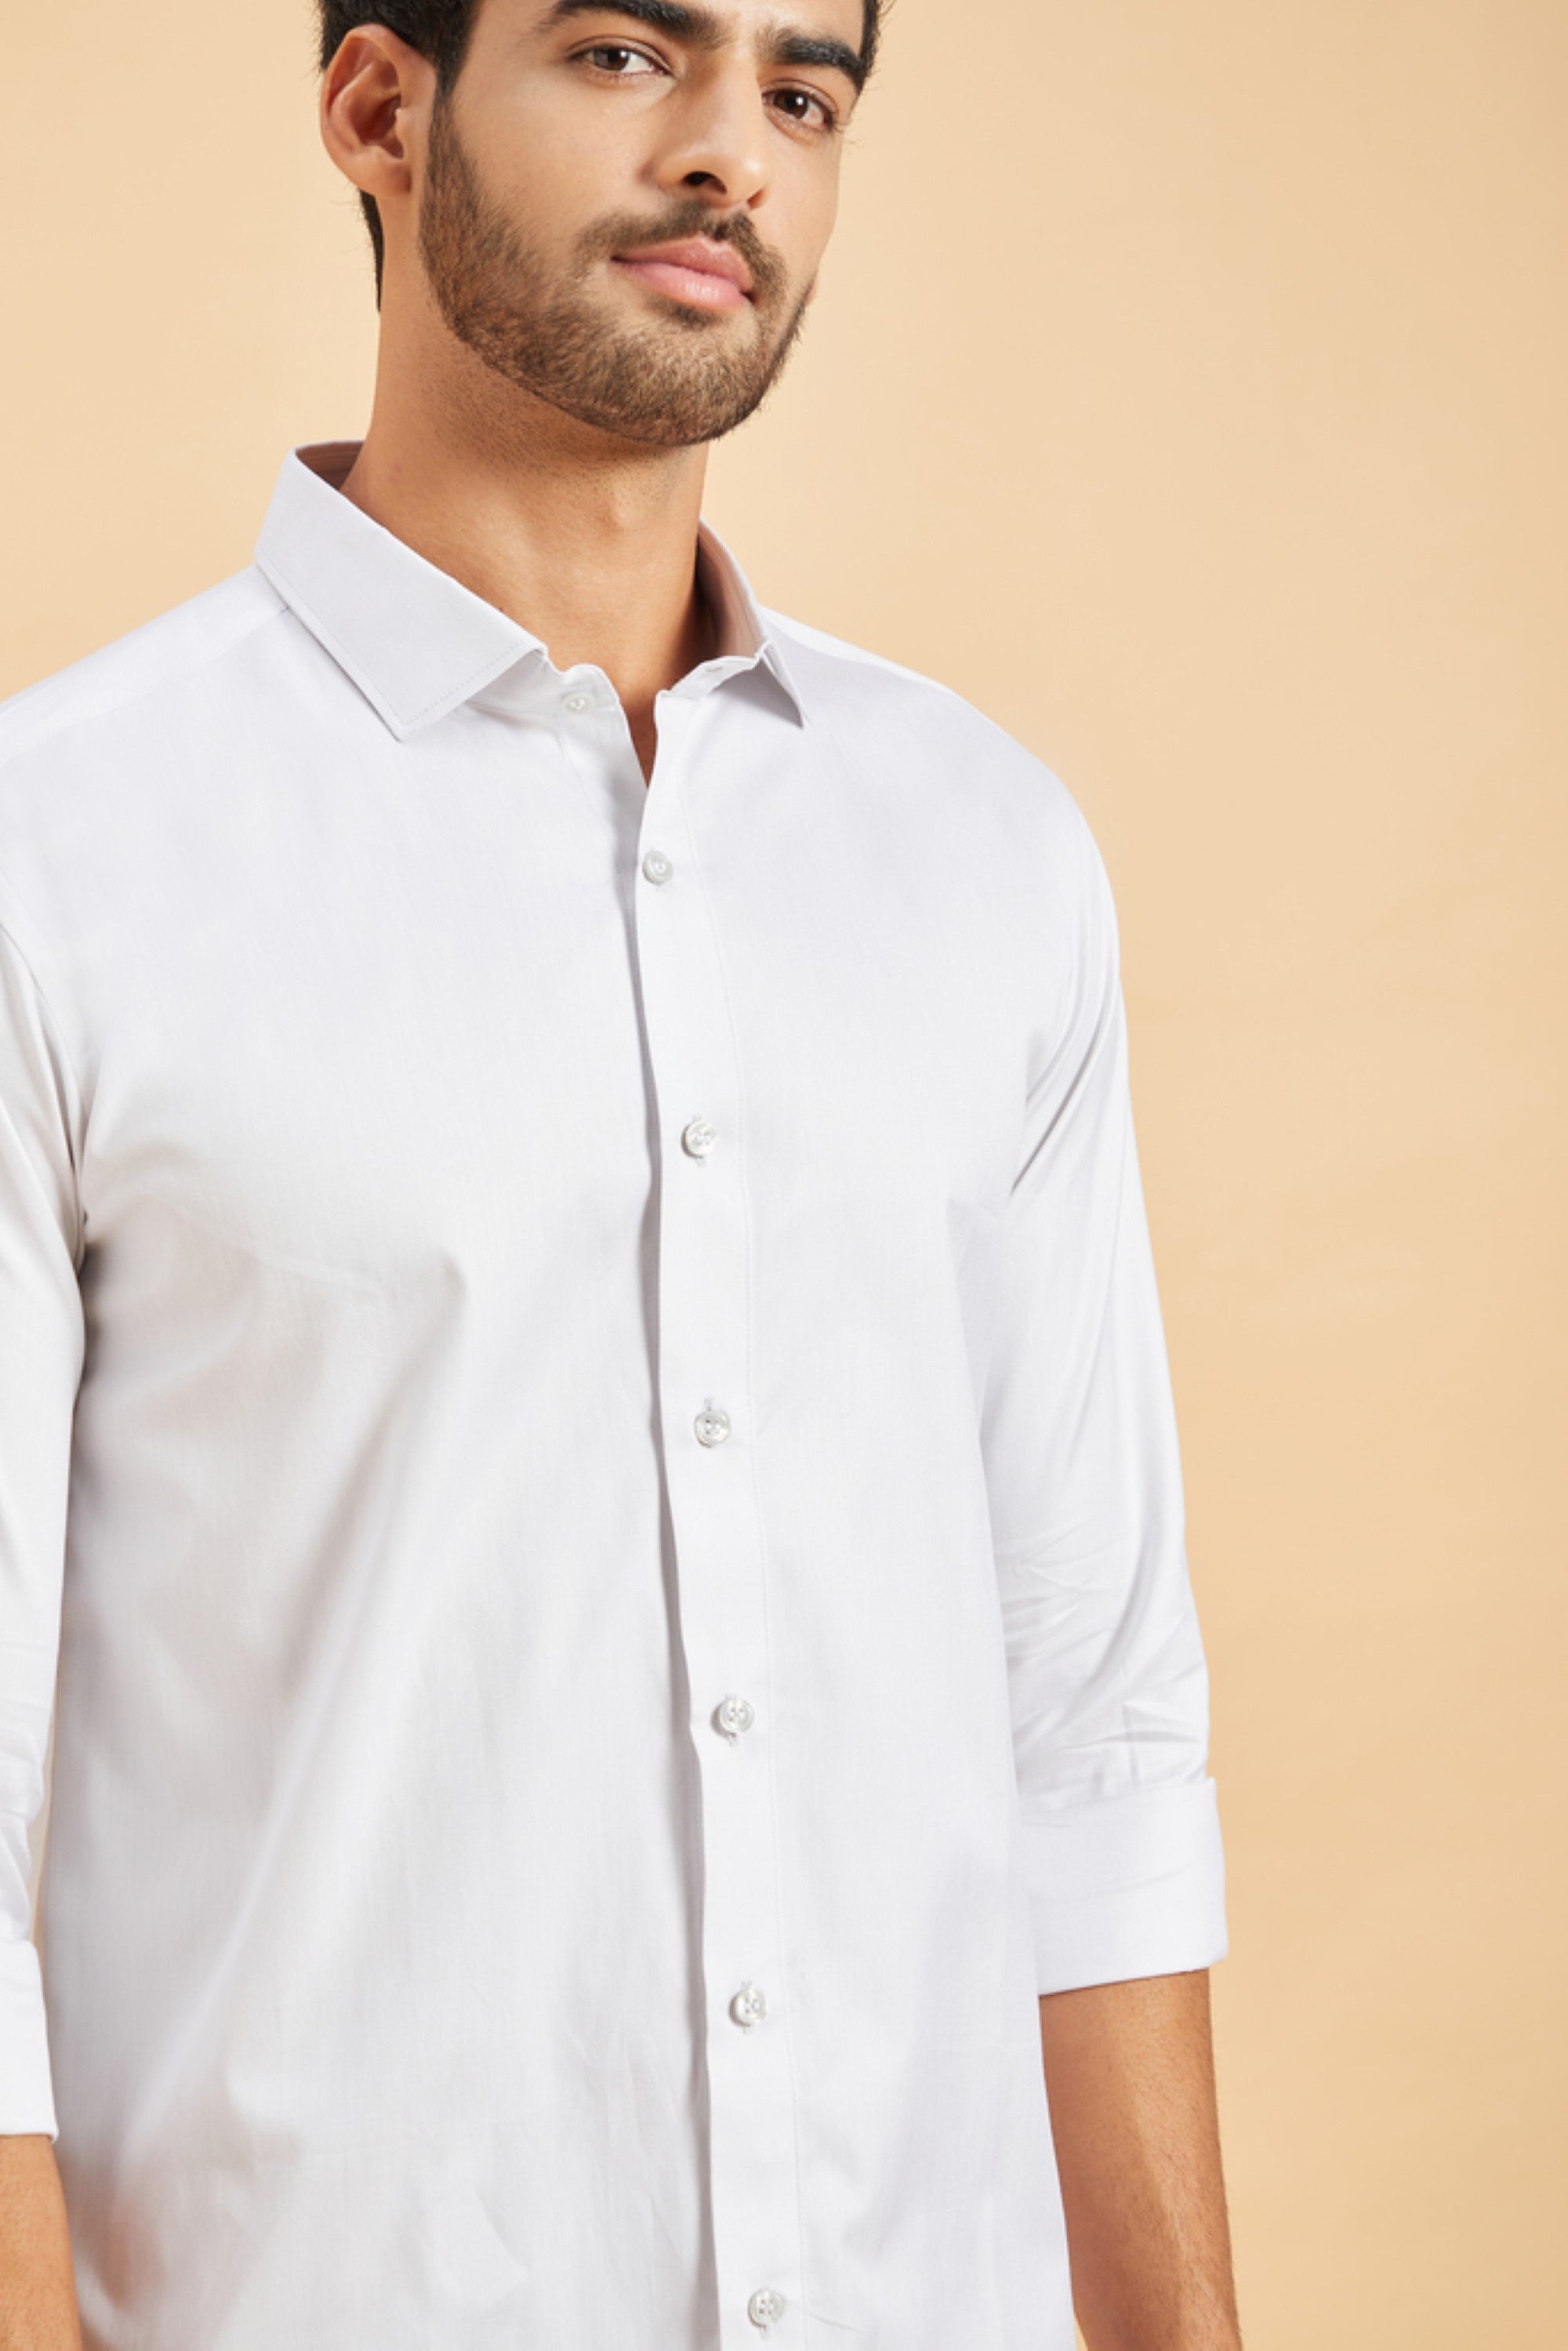 Men's Grey Color June Grey Shirt Full Sleeves Casual Shirt - Hilo Design